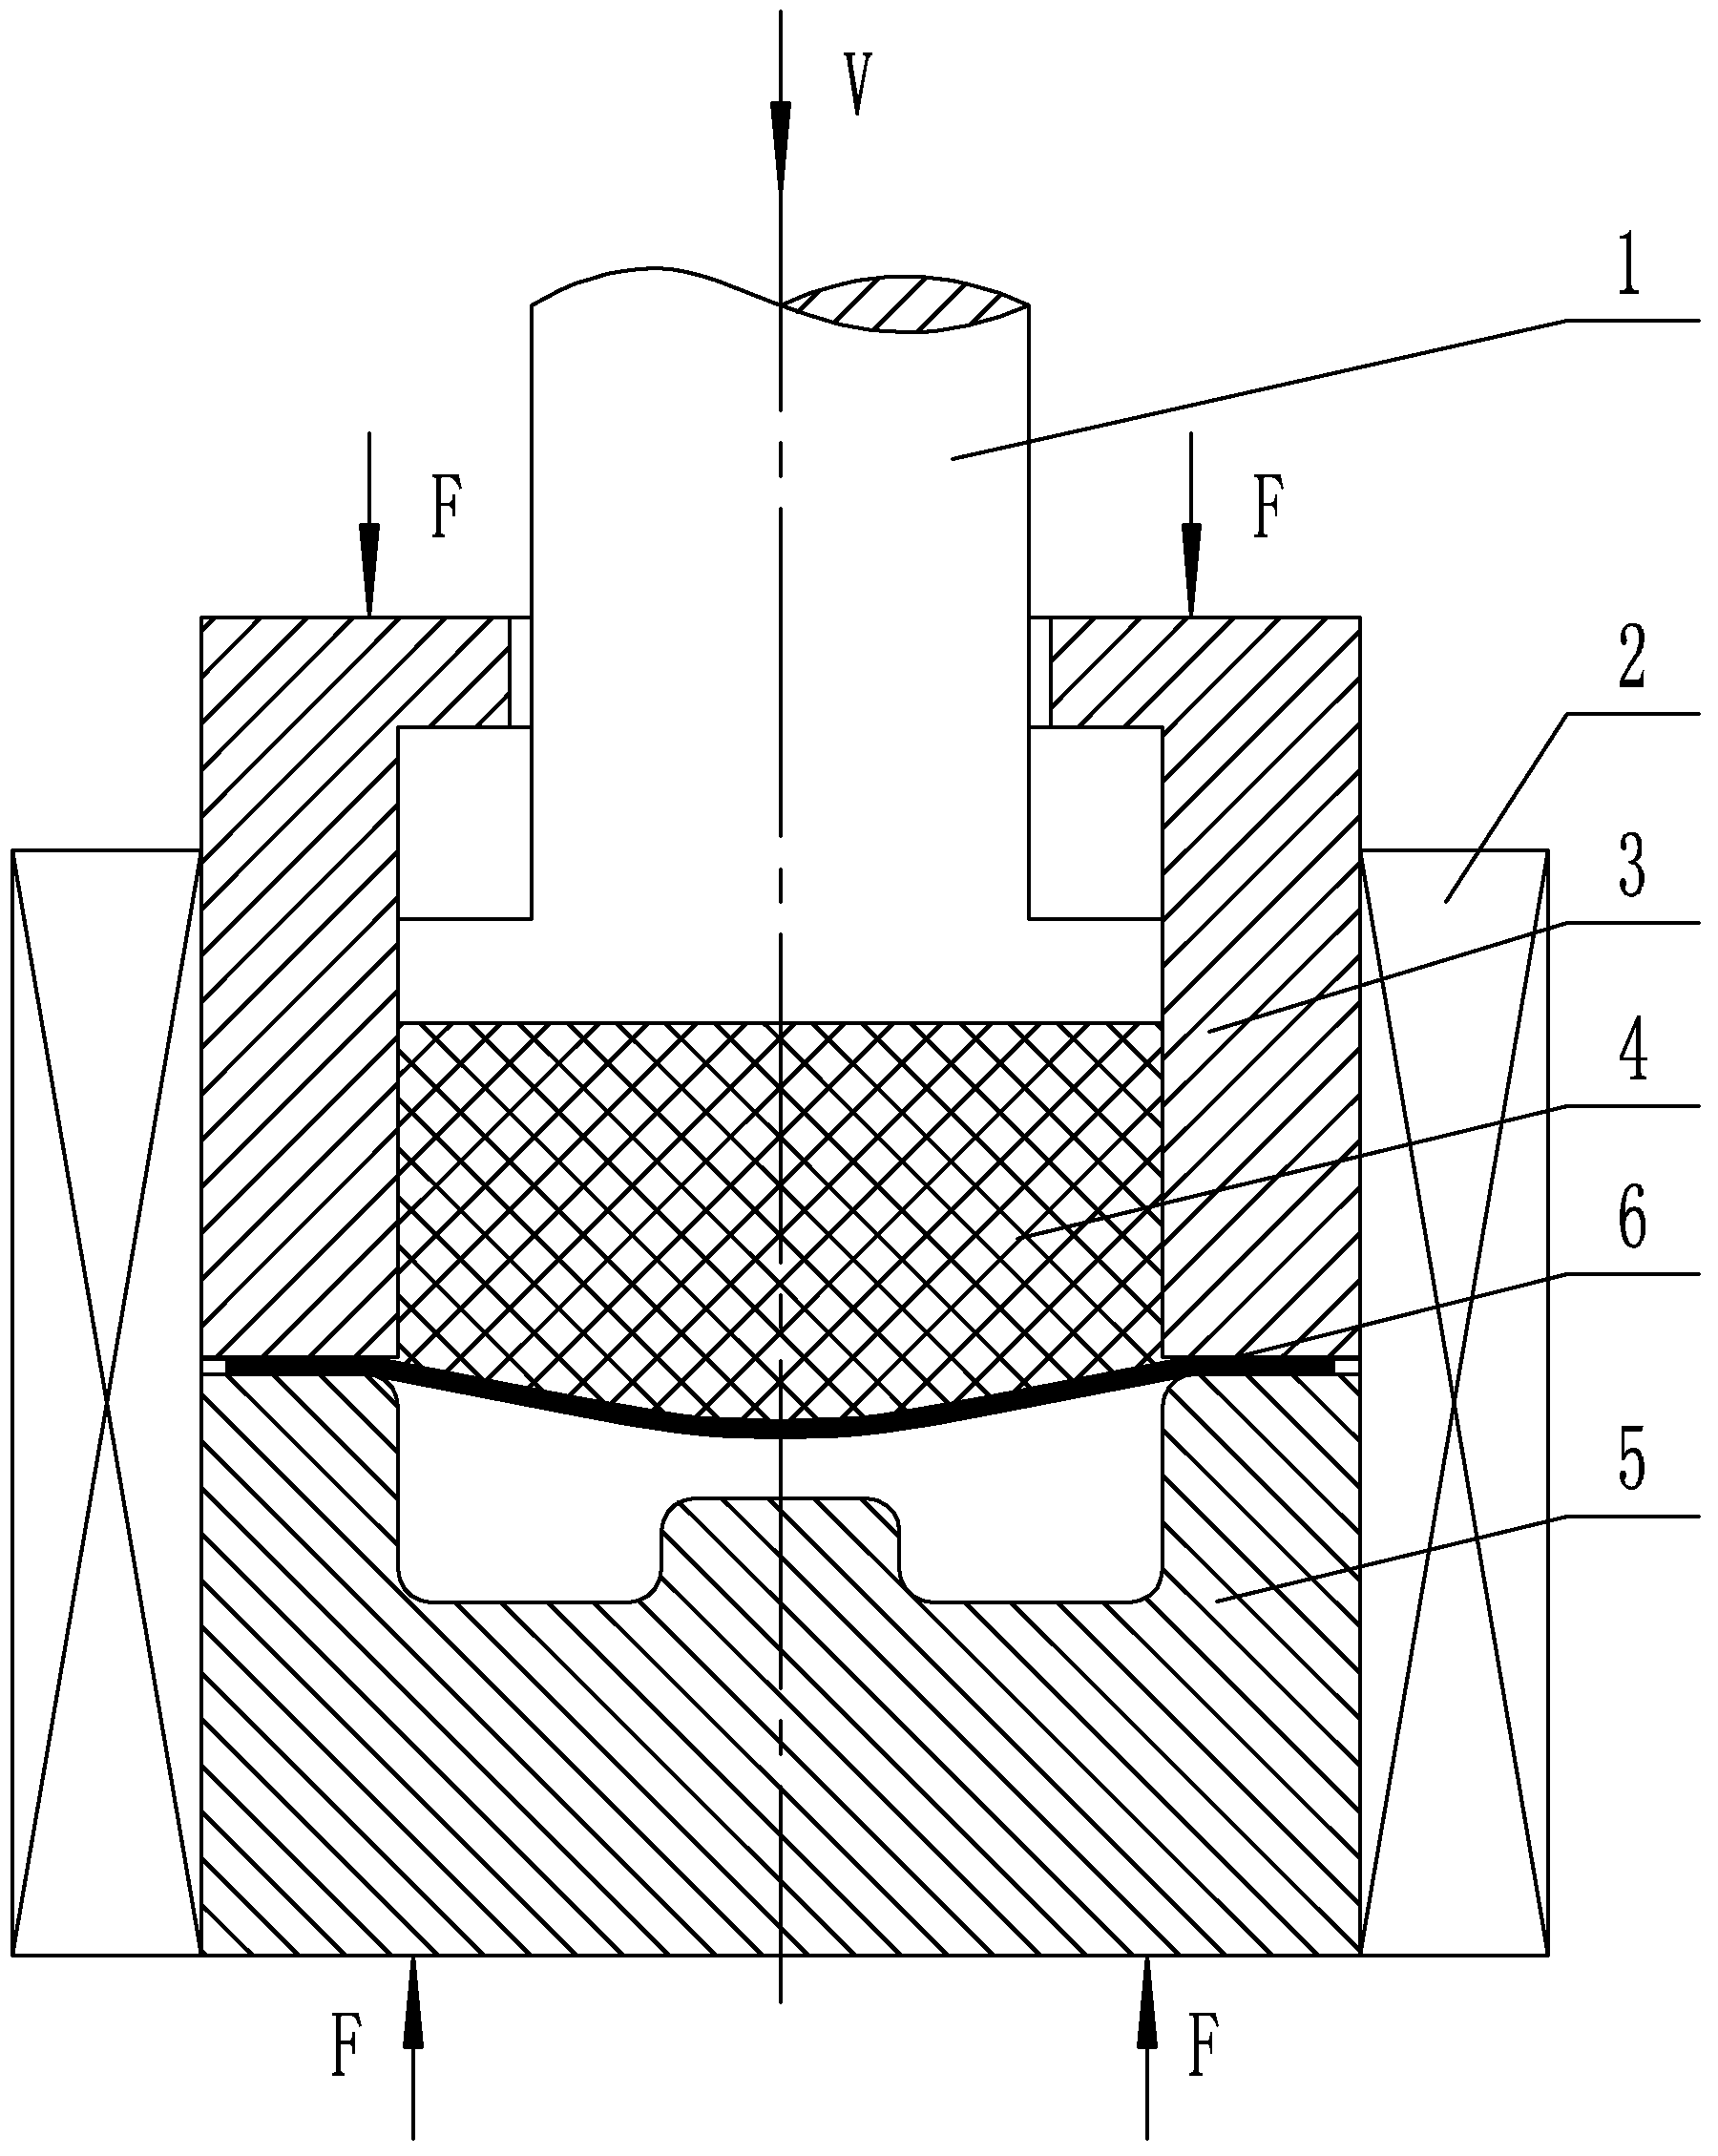 Plank soft mode forming device and method based on magnetorheological elastomers